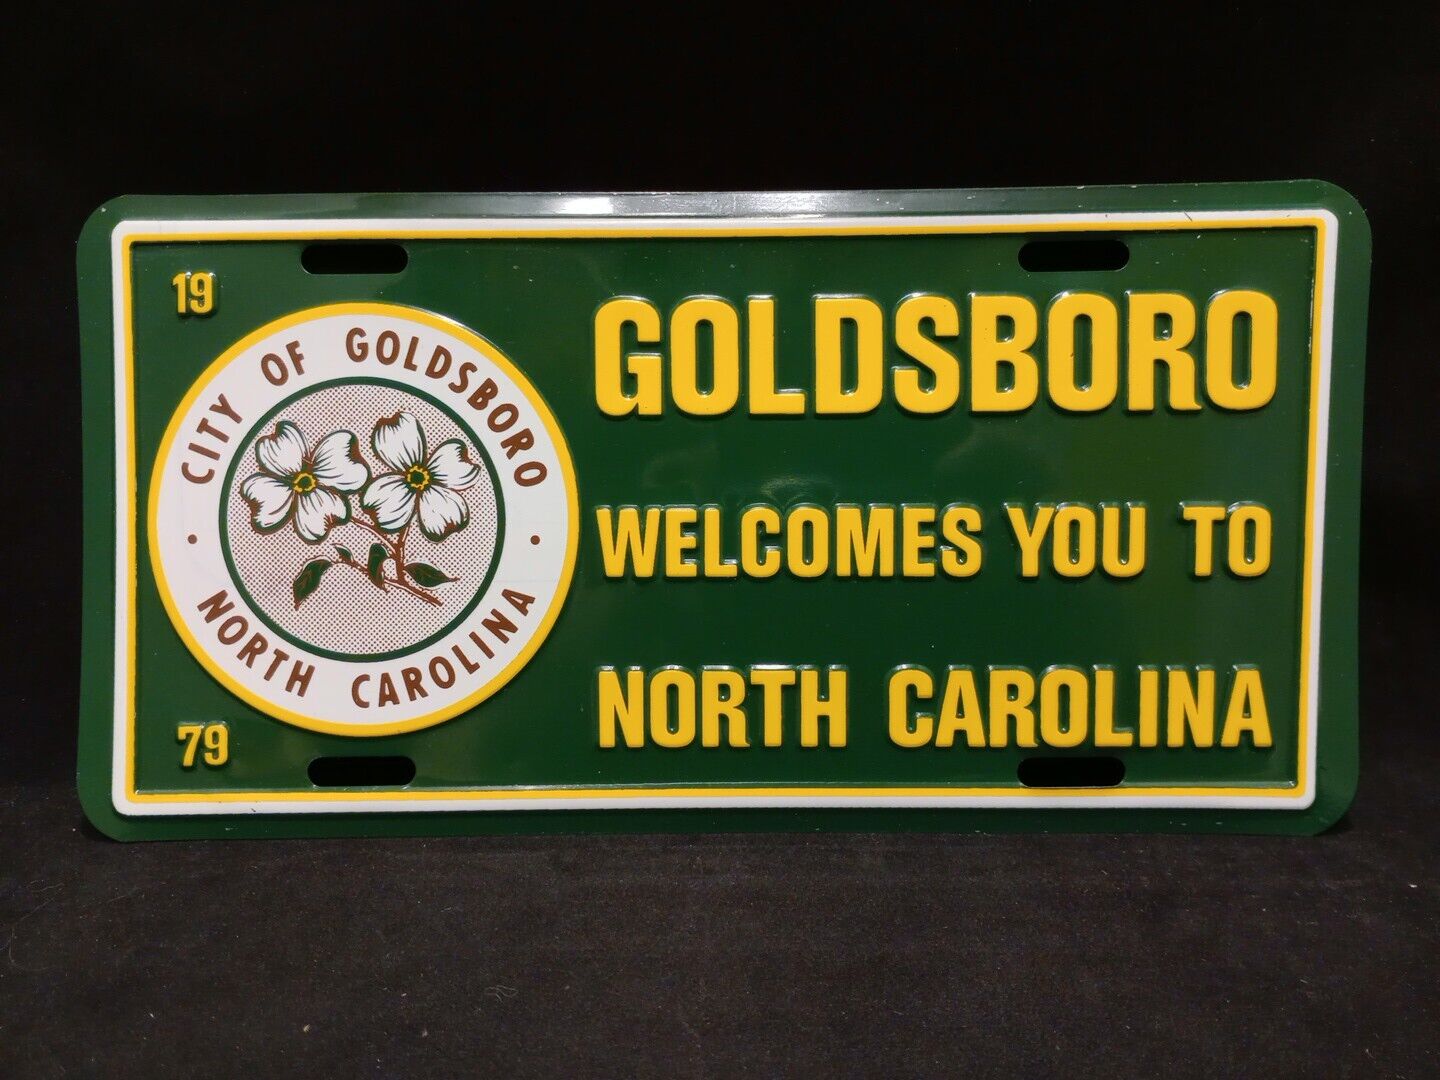 Vintage 1979 Goldsboro NC License Plate Goldsboro Welcomes You To North Carolina